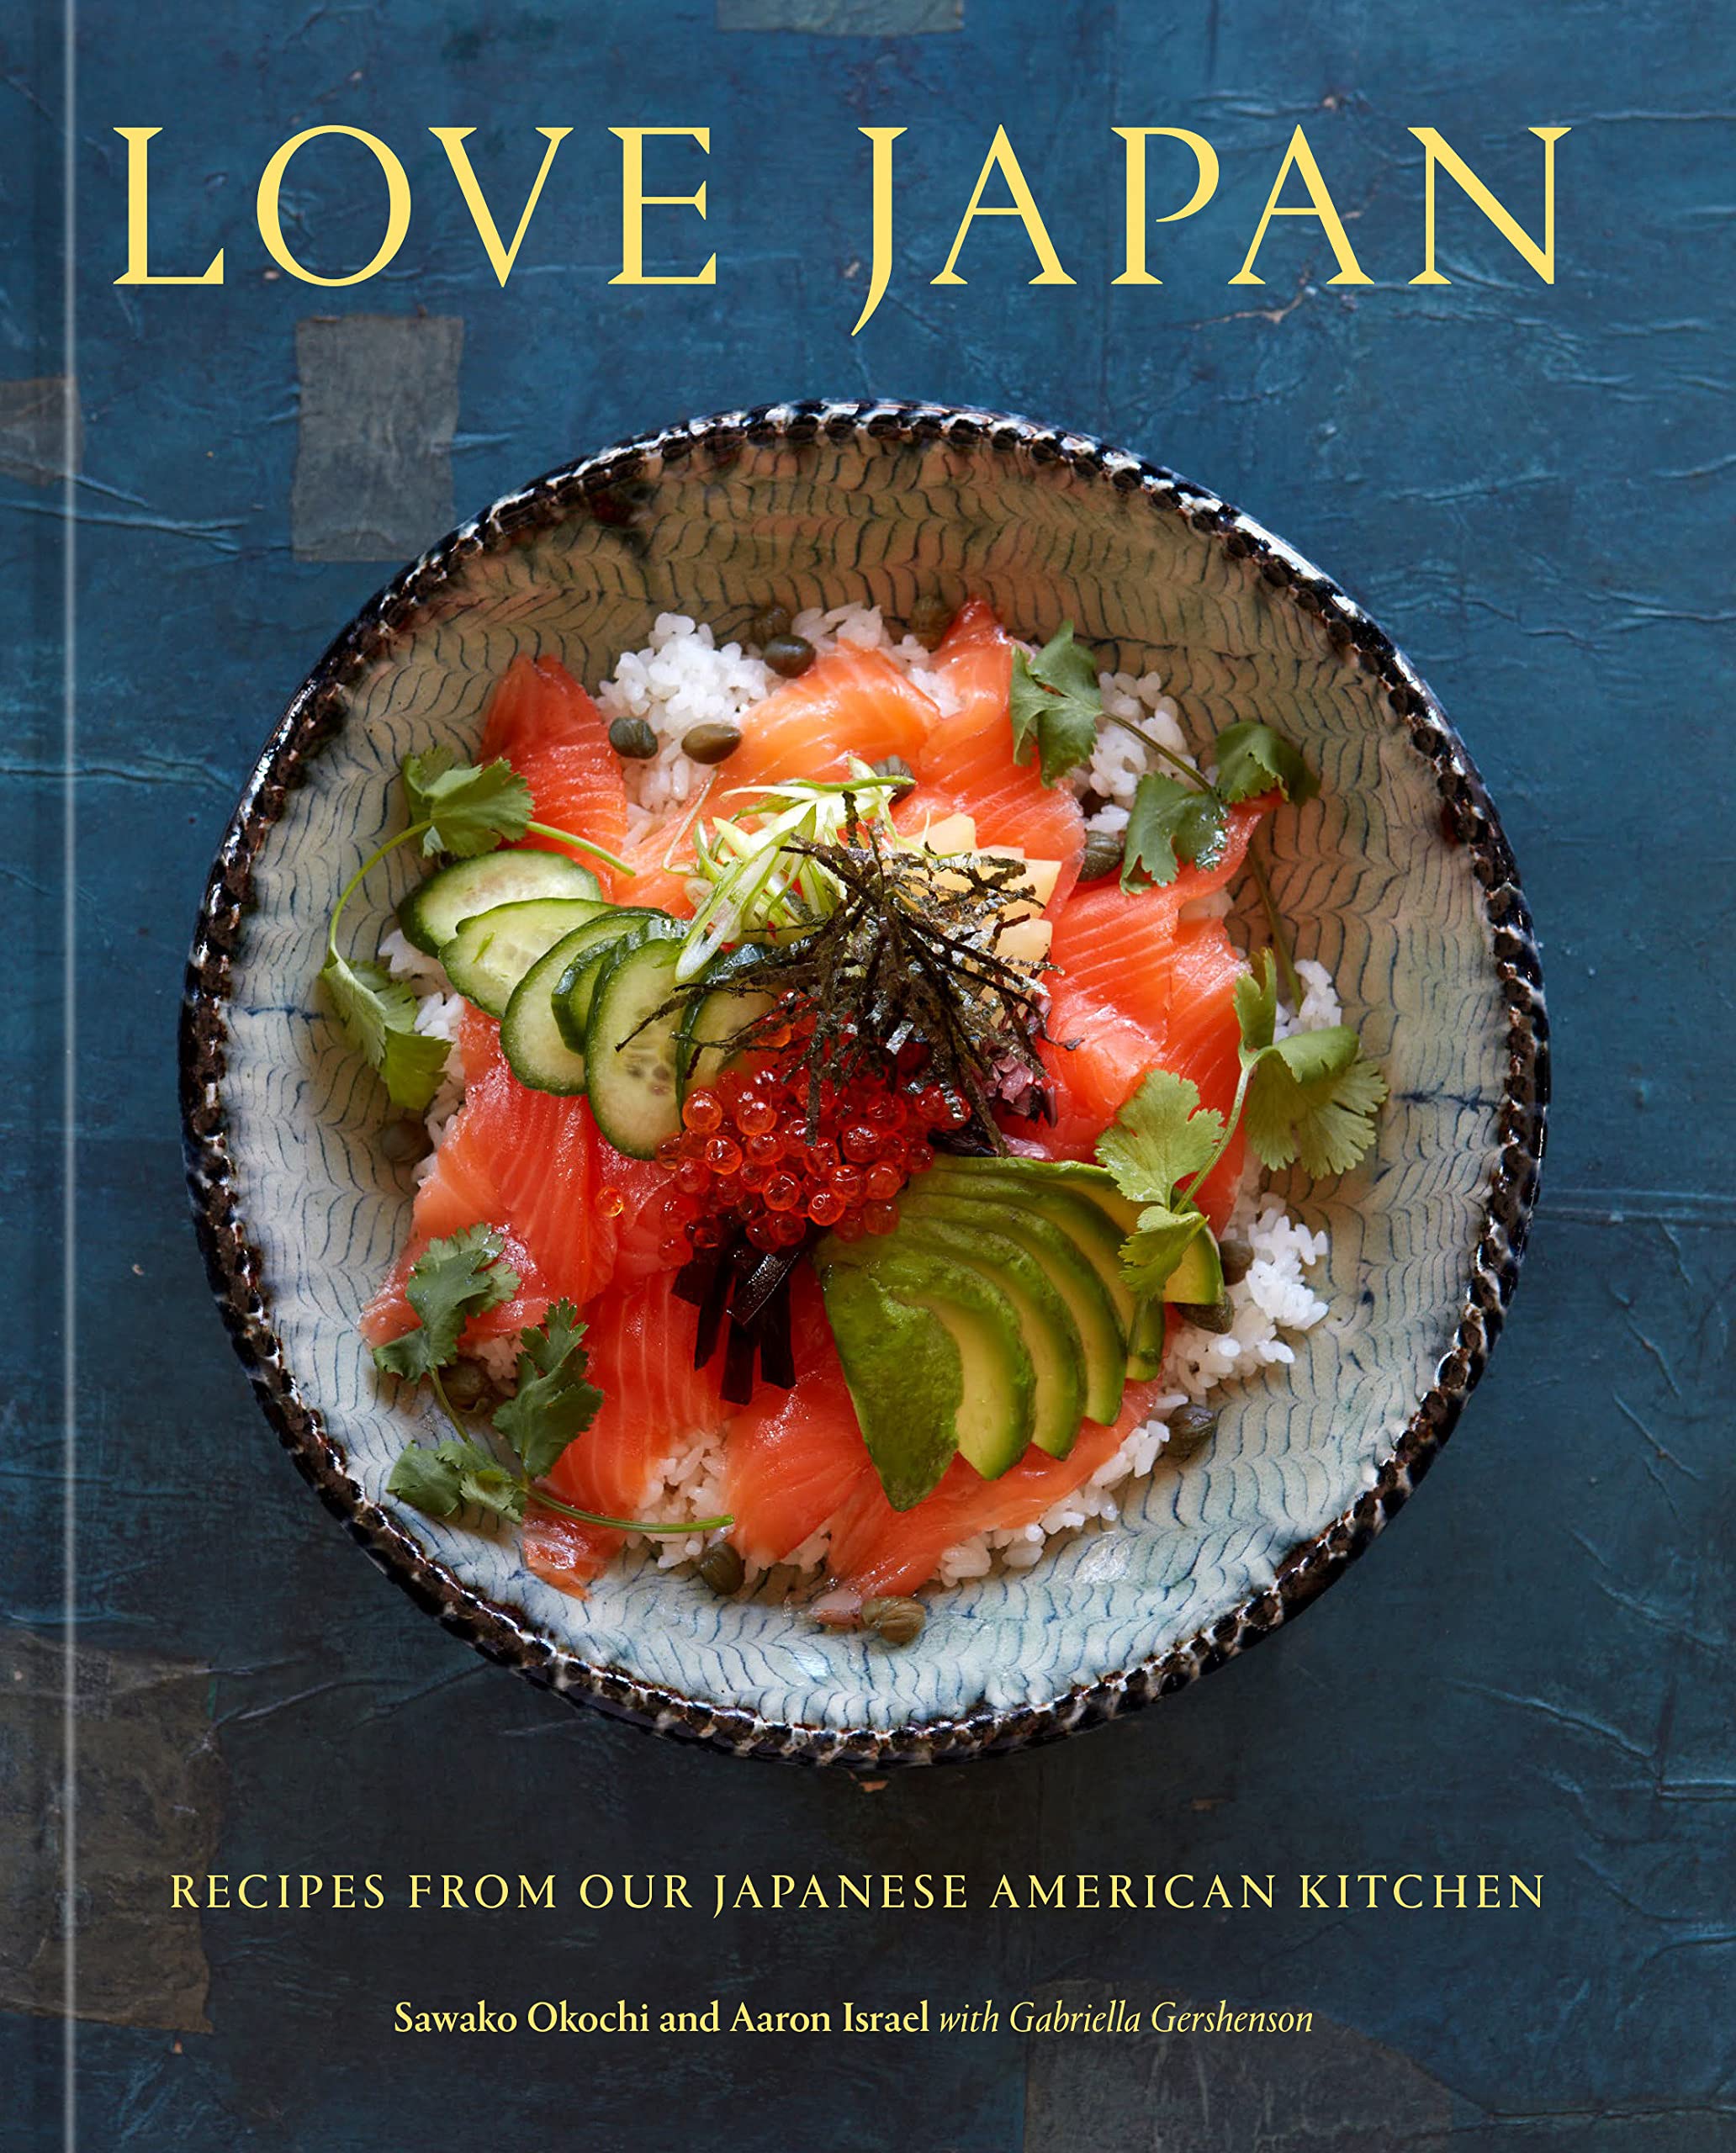 Love Japan: Recipes from our Japanese American Kitchen (Sawako Okochi, Aaron Israel, Gabrielle Gershenson) *Signed*